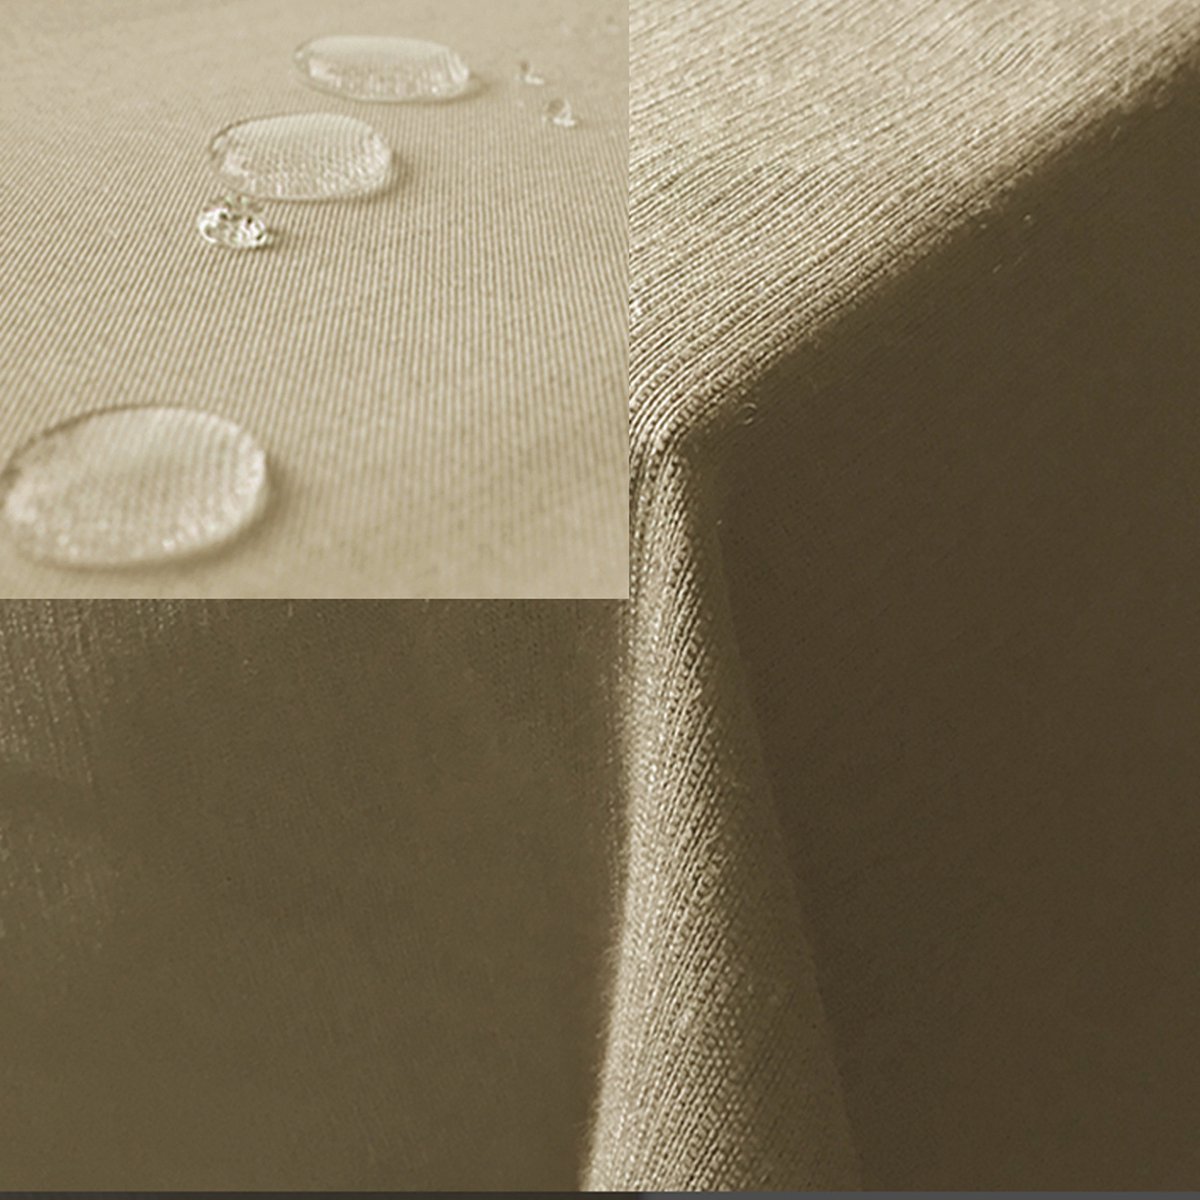 JEMIDI stoffen tafelkleed 135 x 180 cm - Voor binnen of buiten - waterafstotend en vlekbestendig - In zandkleur